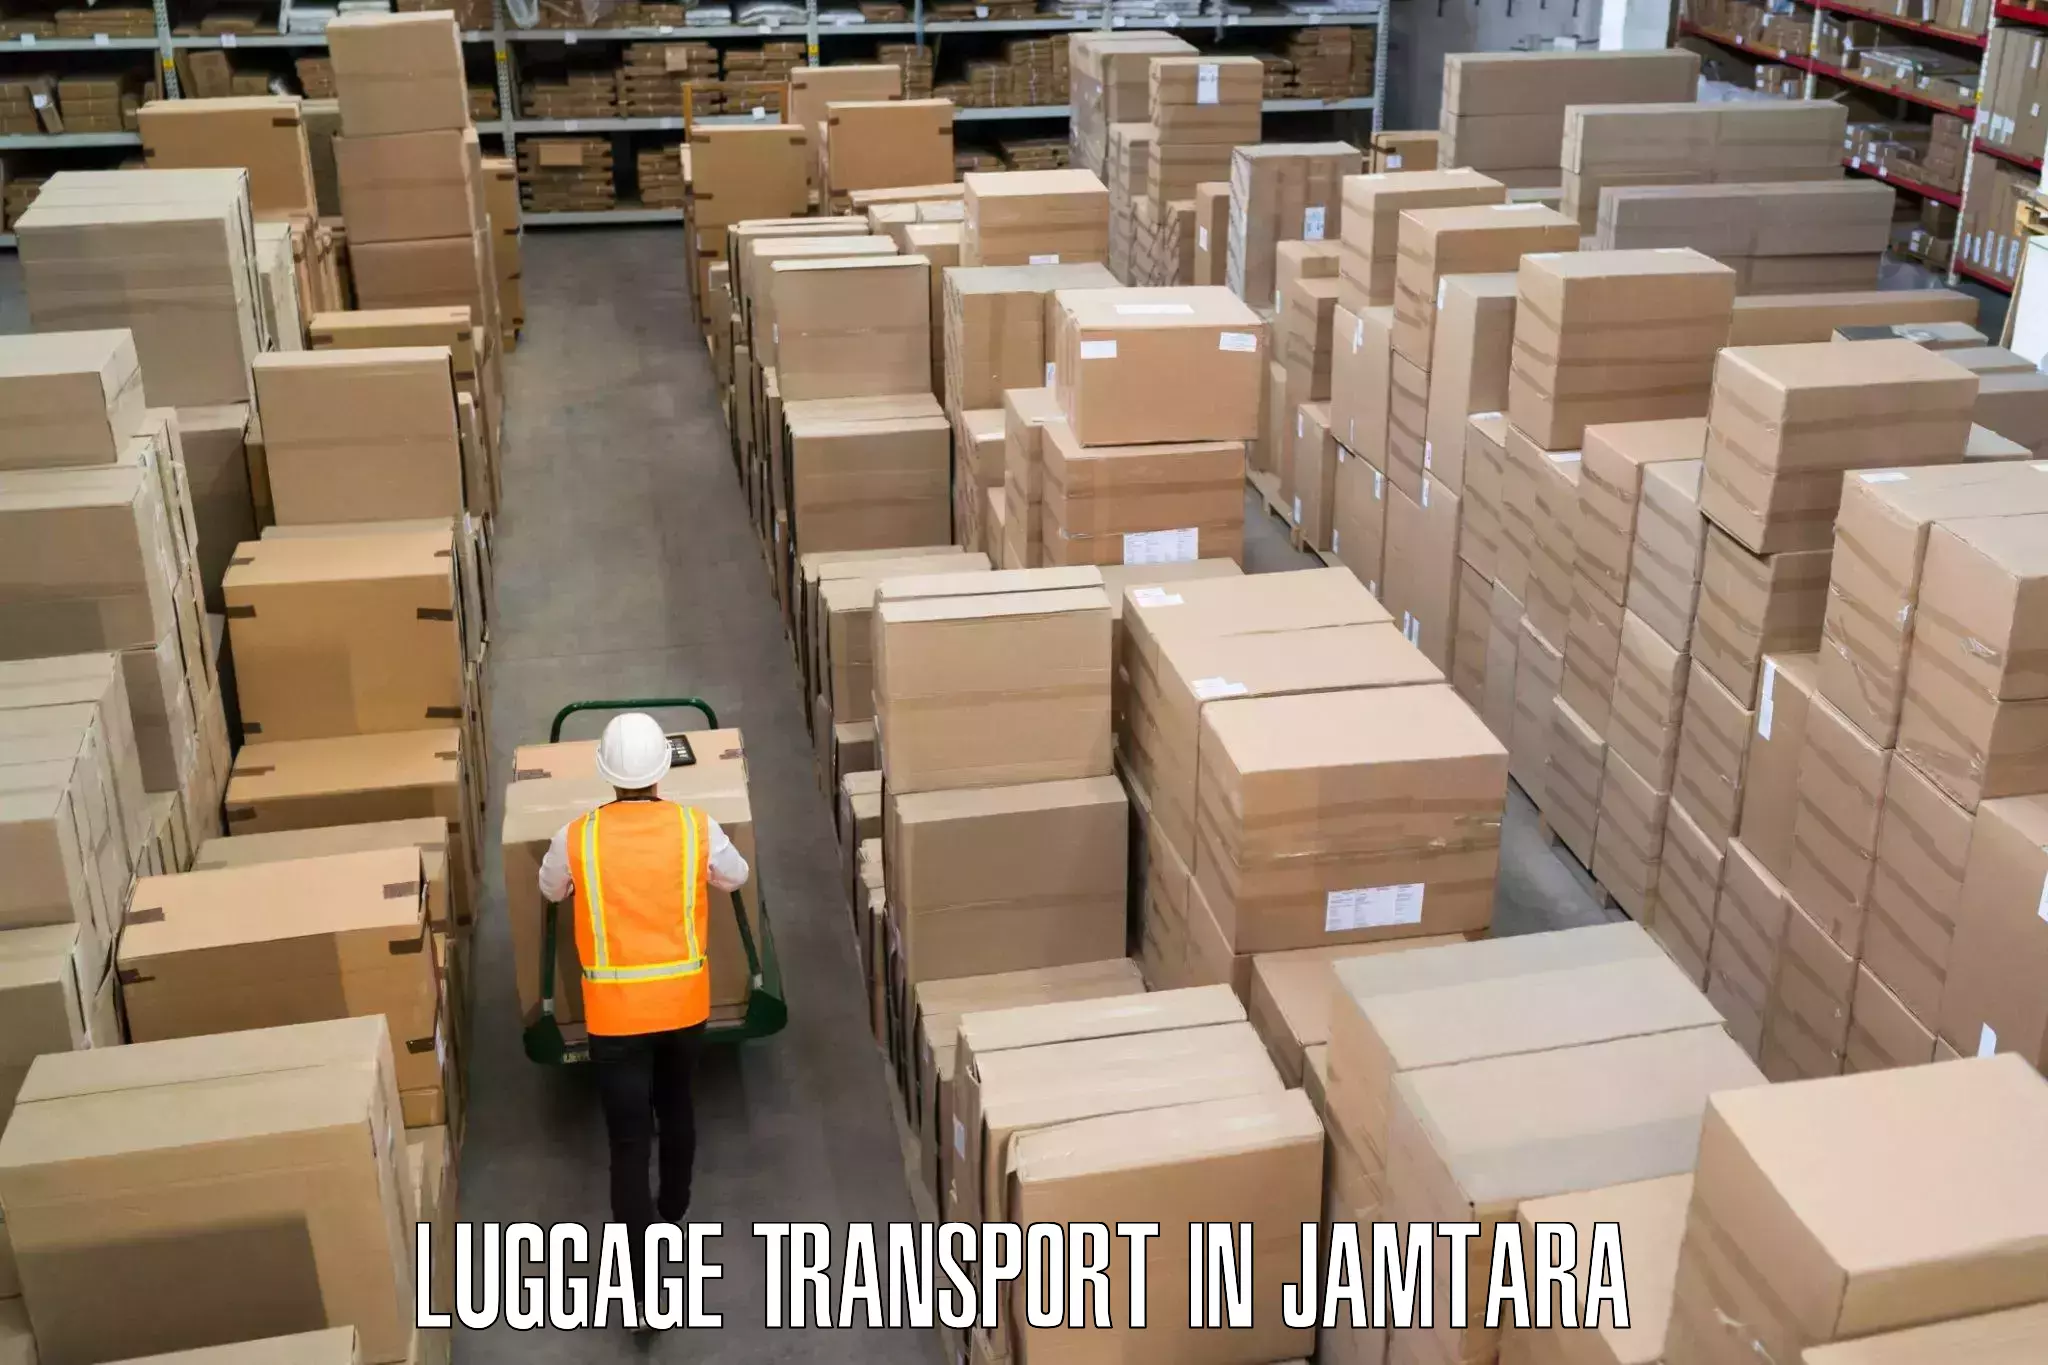 Luggage shipment processing in Jamtara